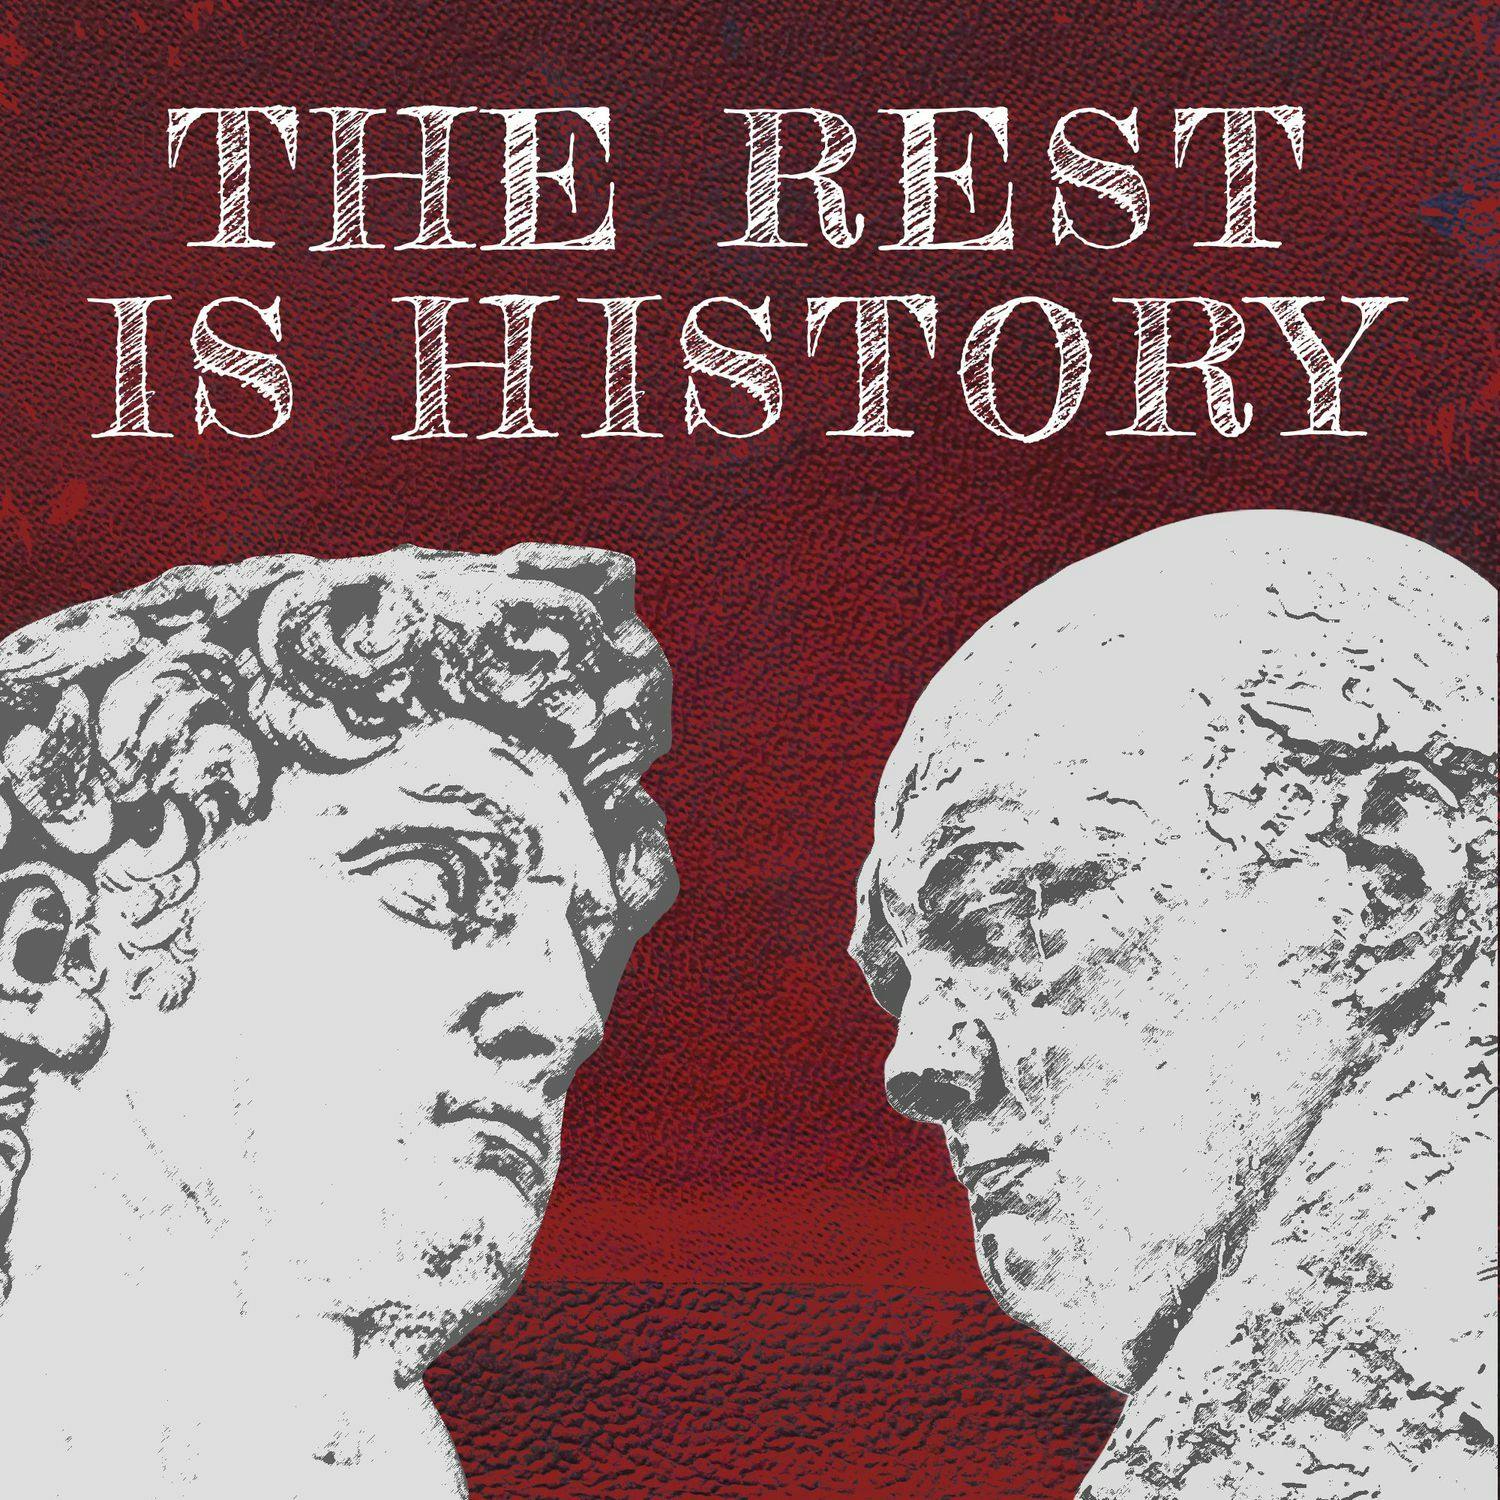 305: The Fall of the Roman Republic